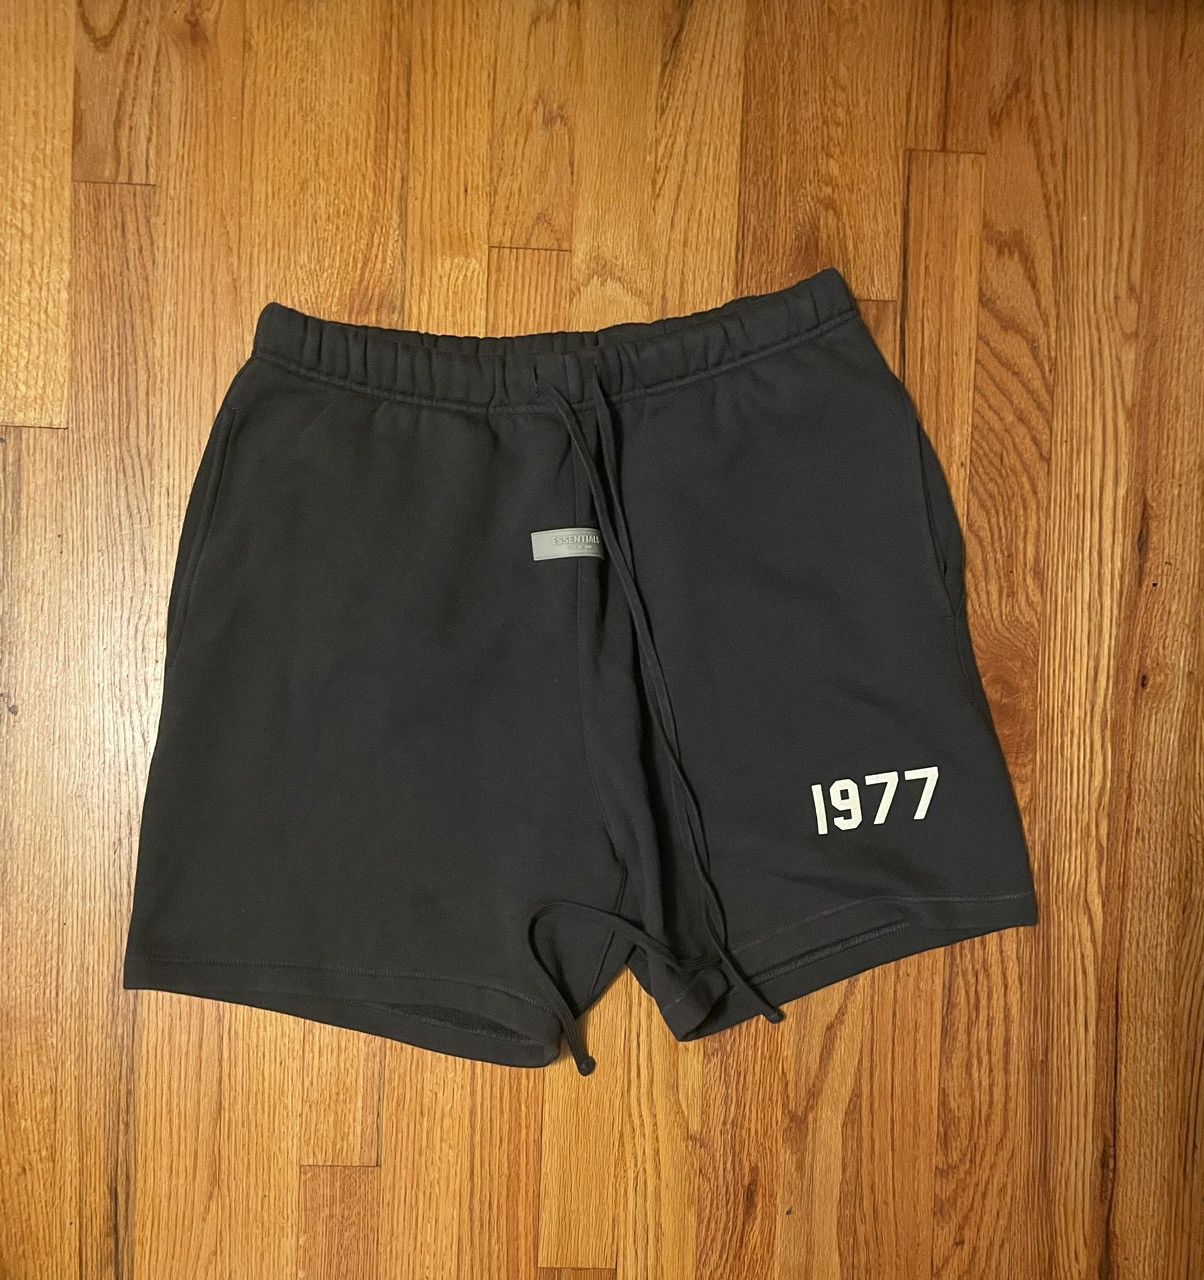 Fear Of God 1977 Shorts | Grailed